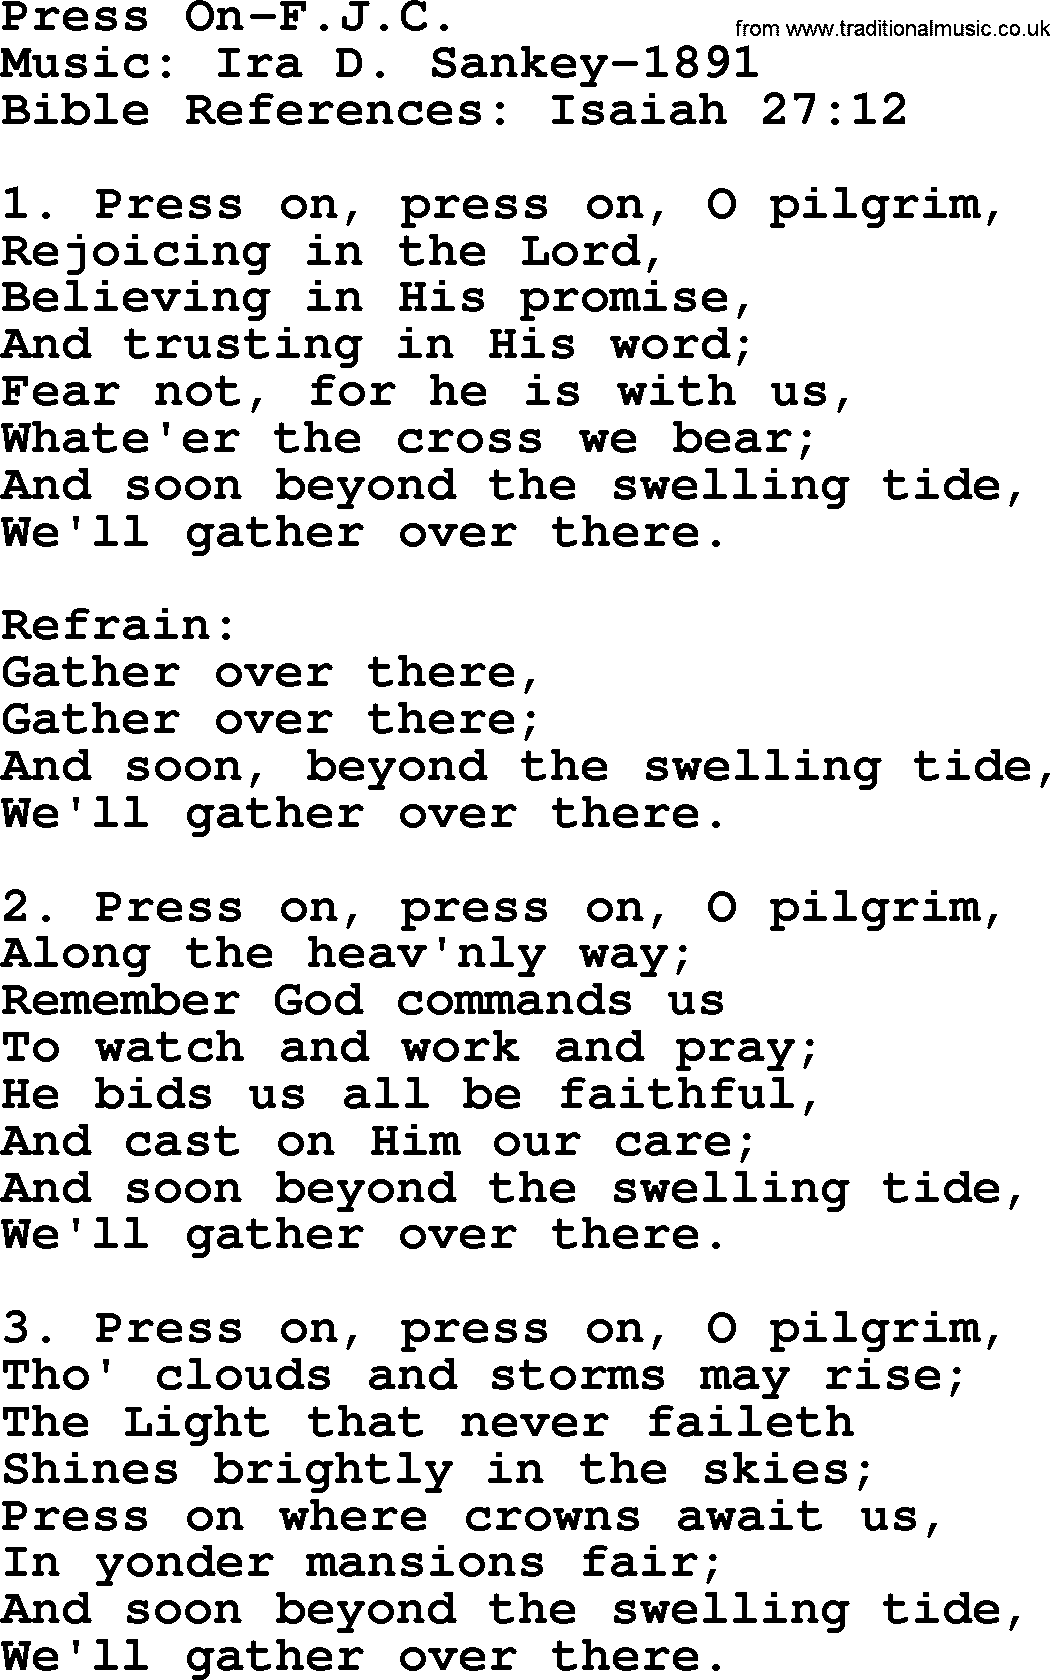 Ira Sankey hymn: Press On-Ira Sankey, lyrics